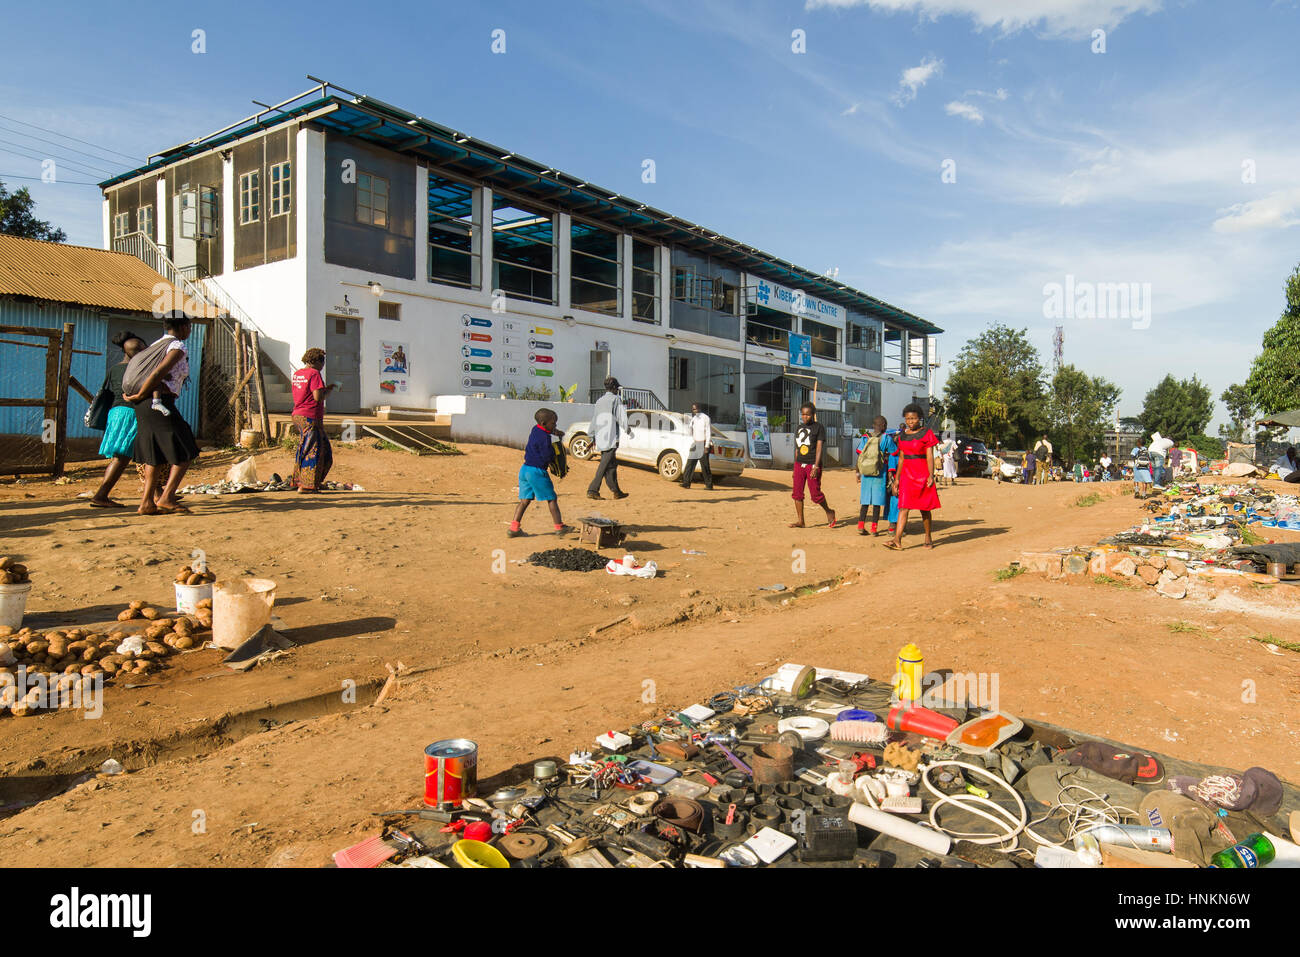 Kibera Town Centre in Kibera Slum, it provides access to clean water, showers and washing facilities to residents, Nairobi, Kenya Stock Photo